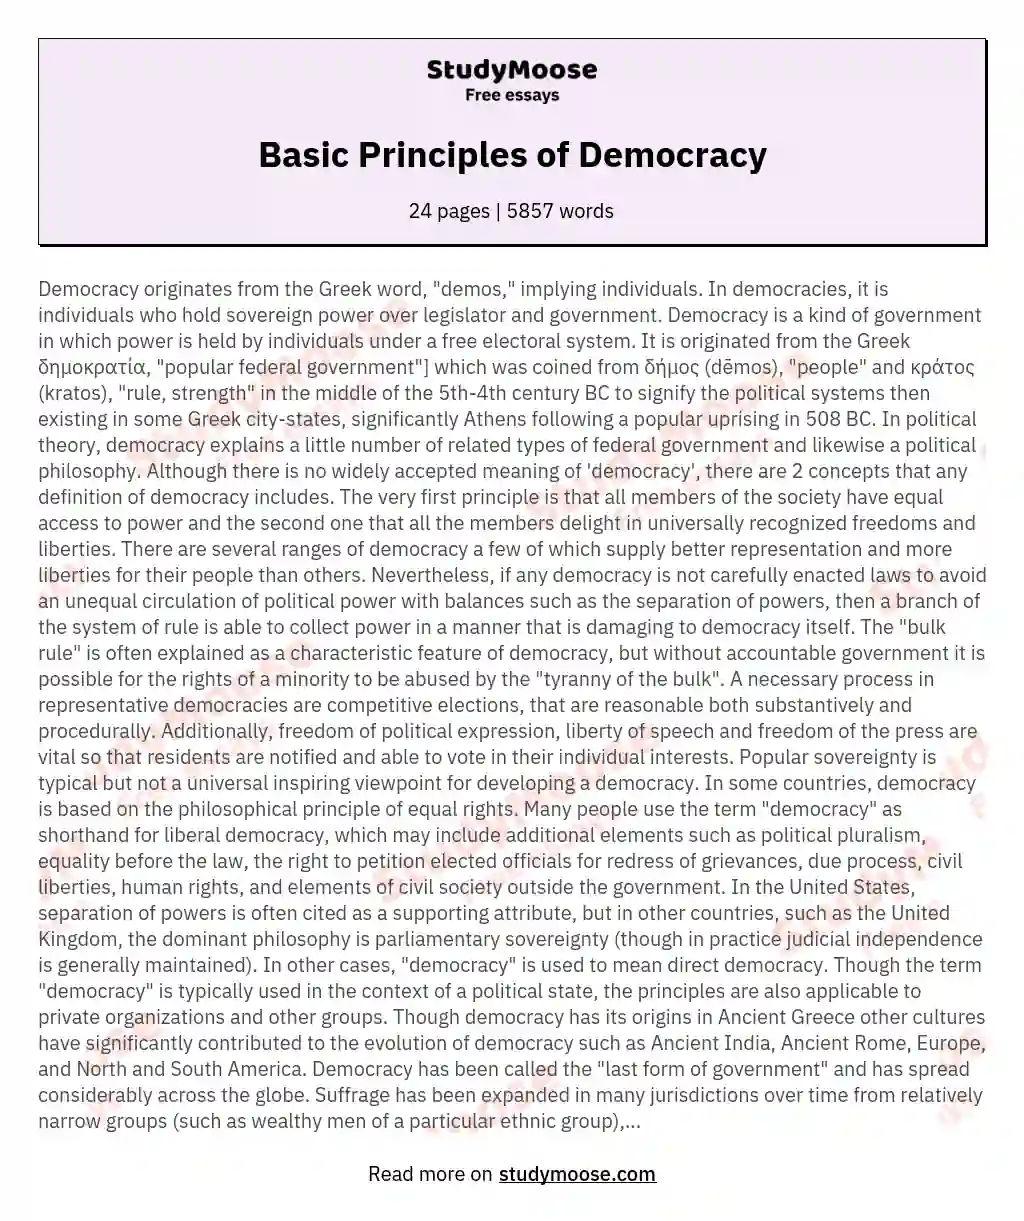 Basic Principles of Democracy essay